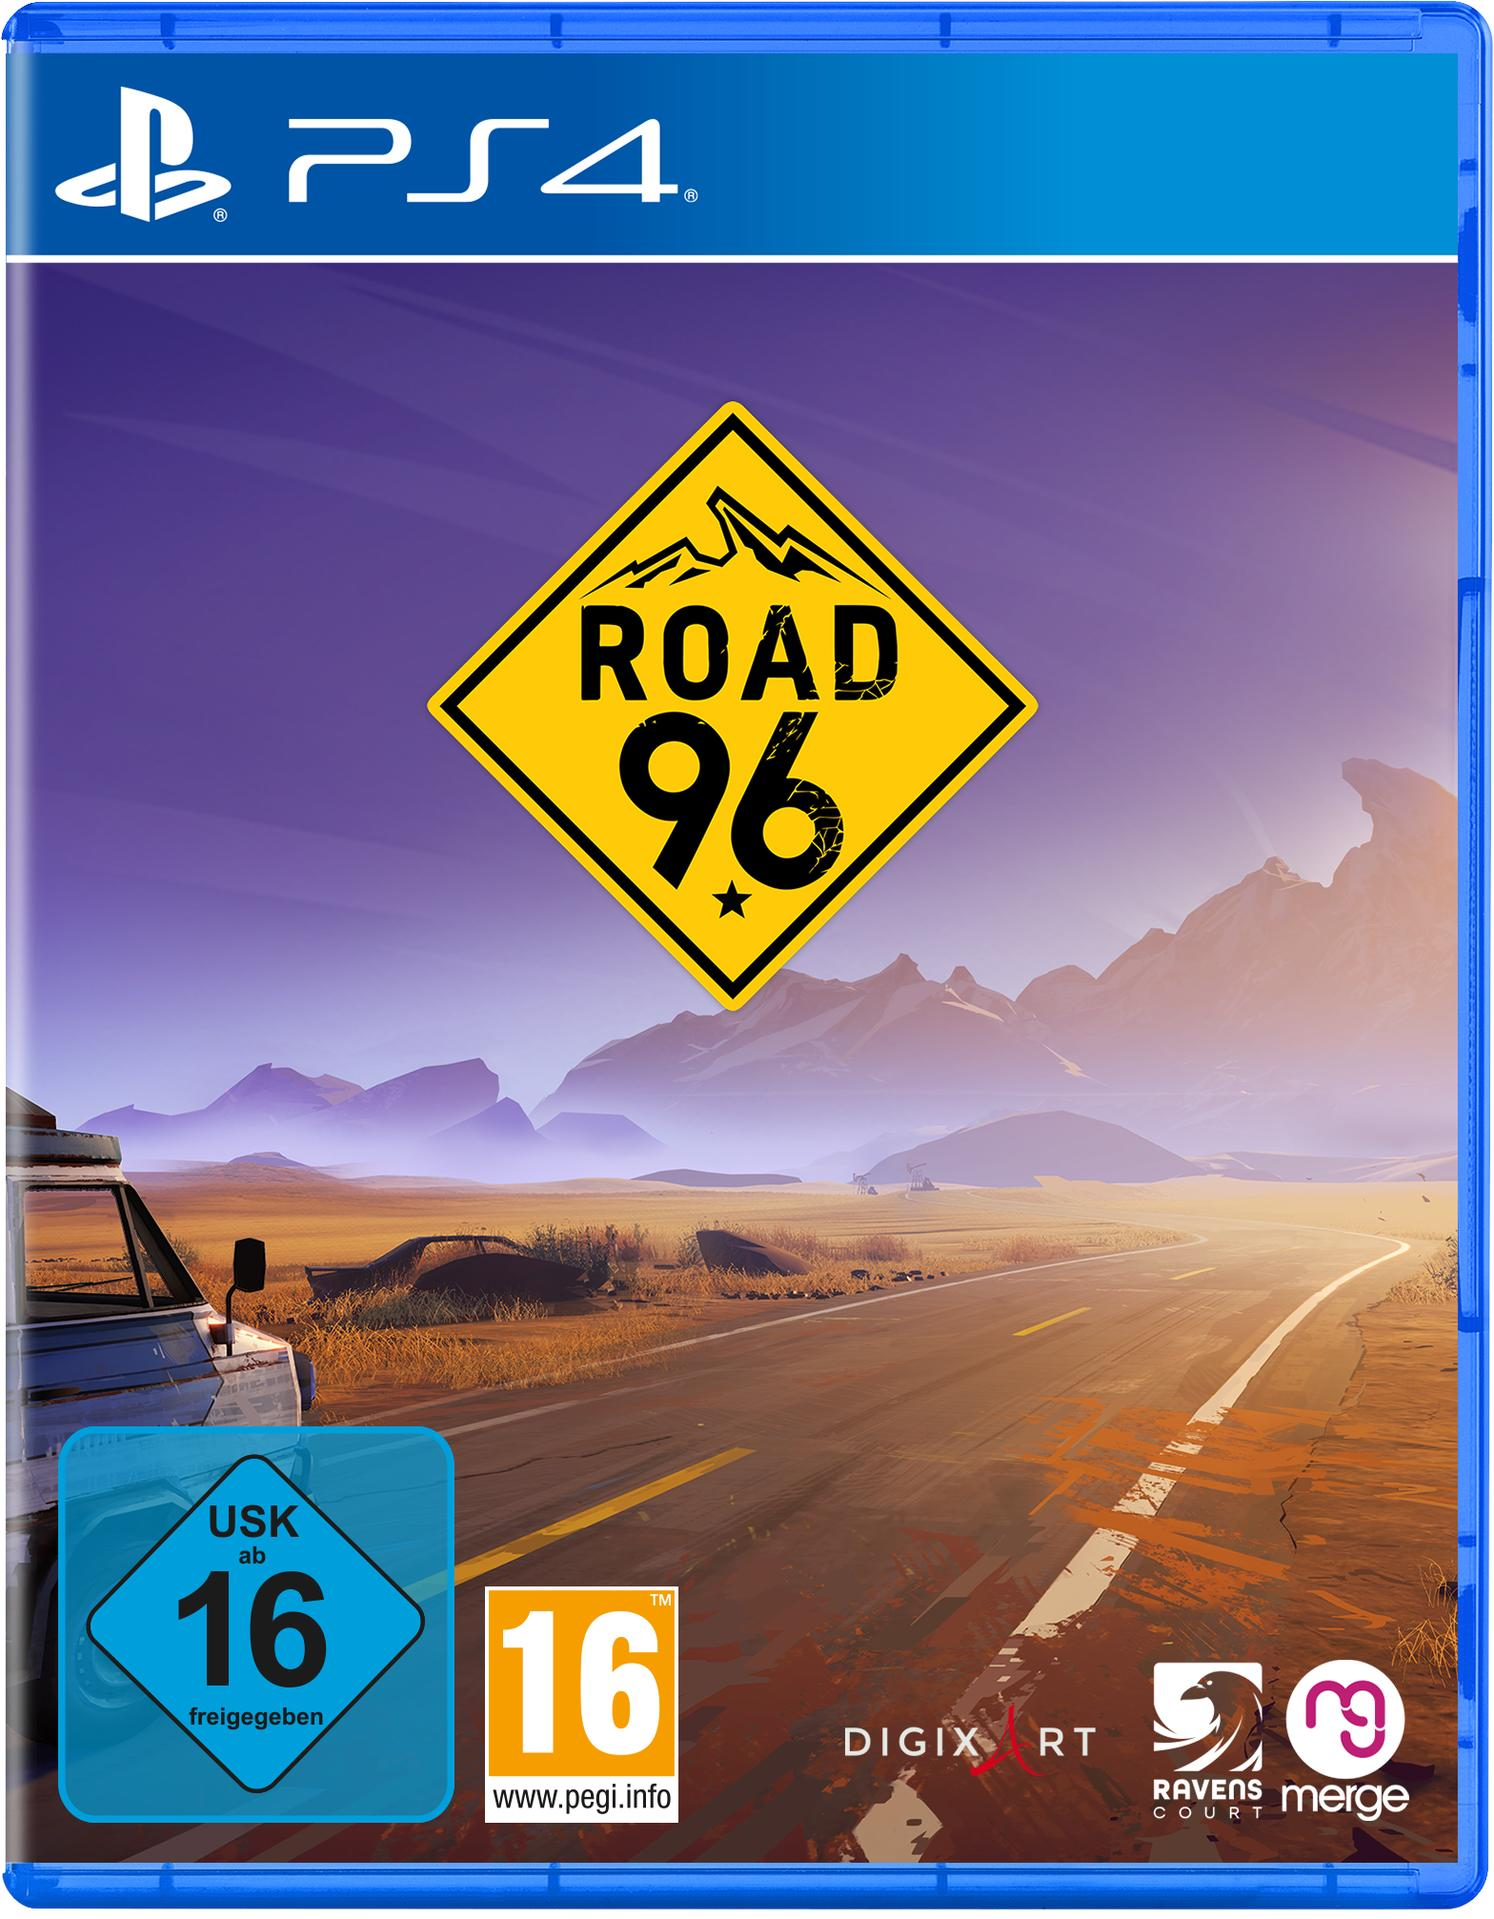 96 - [PlayStation Road 4]